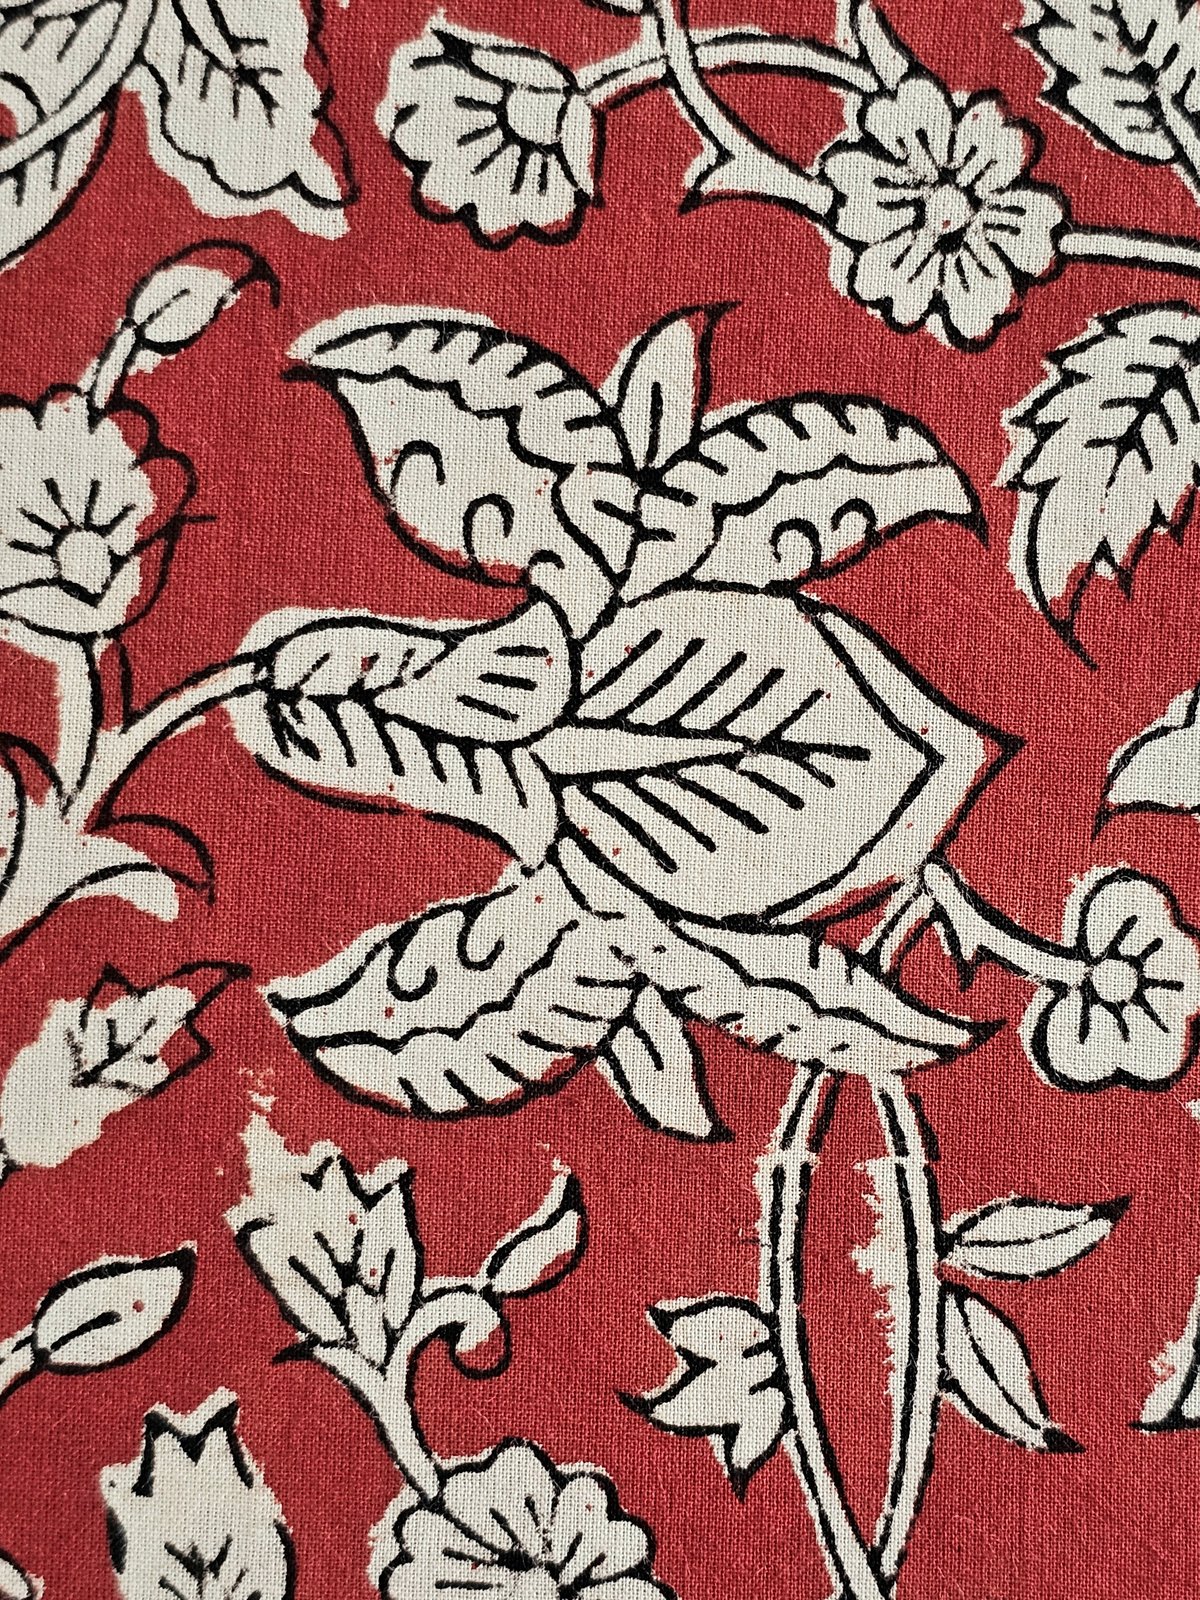 Image of Namaste fabric rouge grosses fleurs